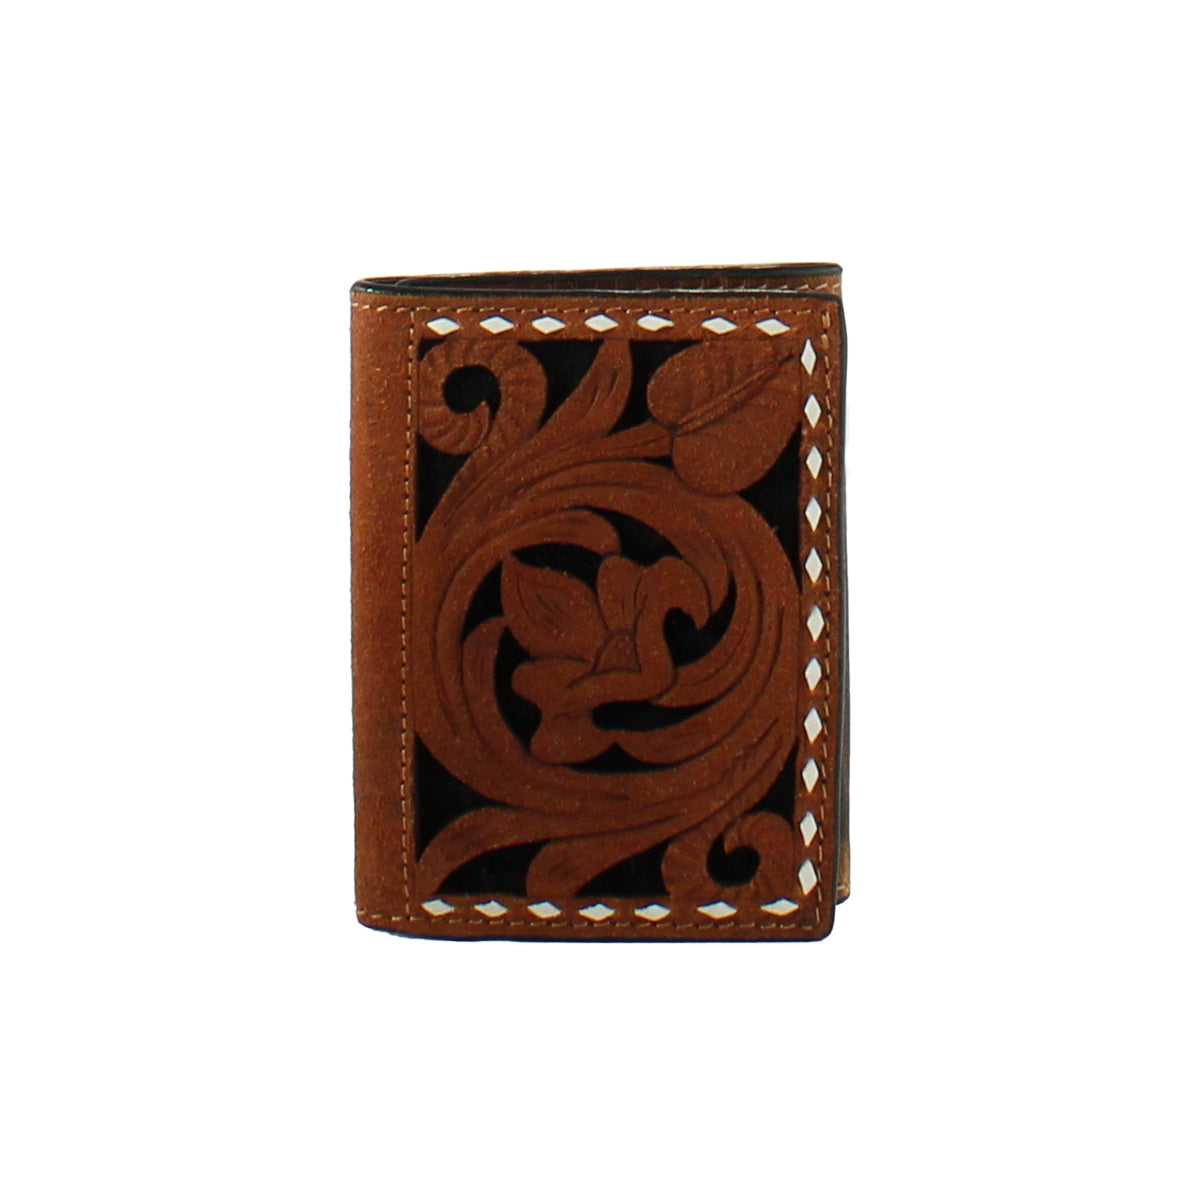 3D Trifold Men's Wallet Floral Filigree Brown STYLE D250006102